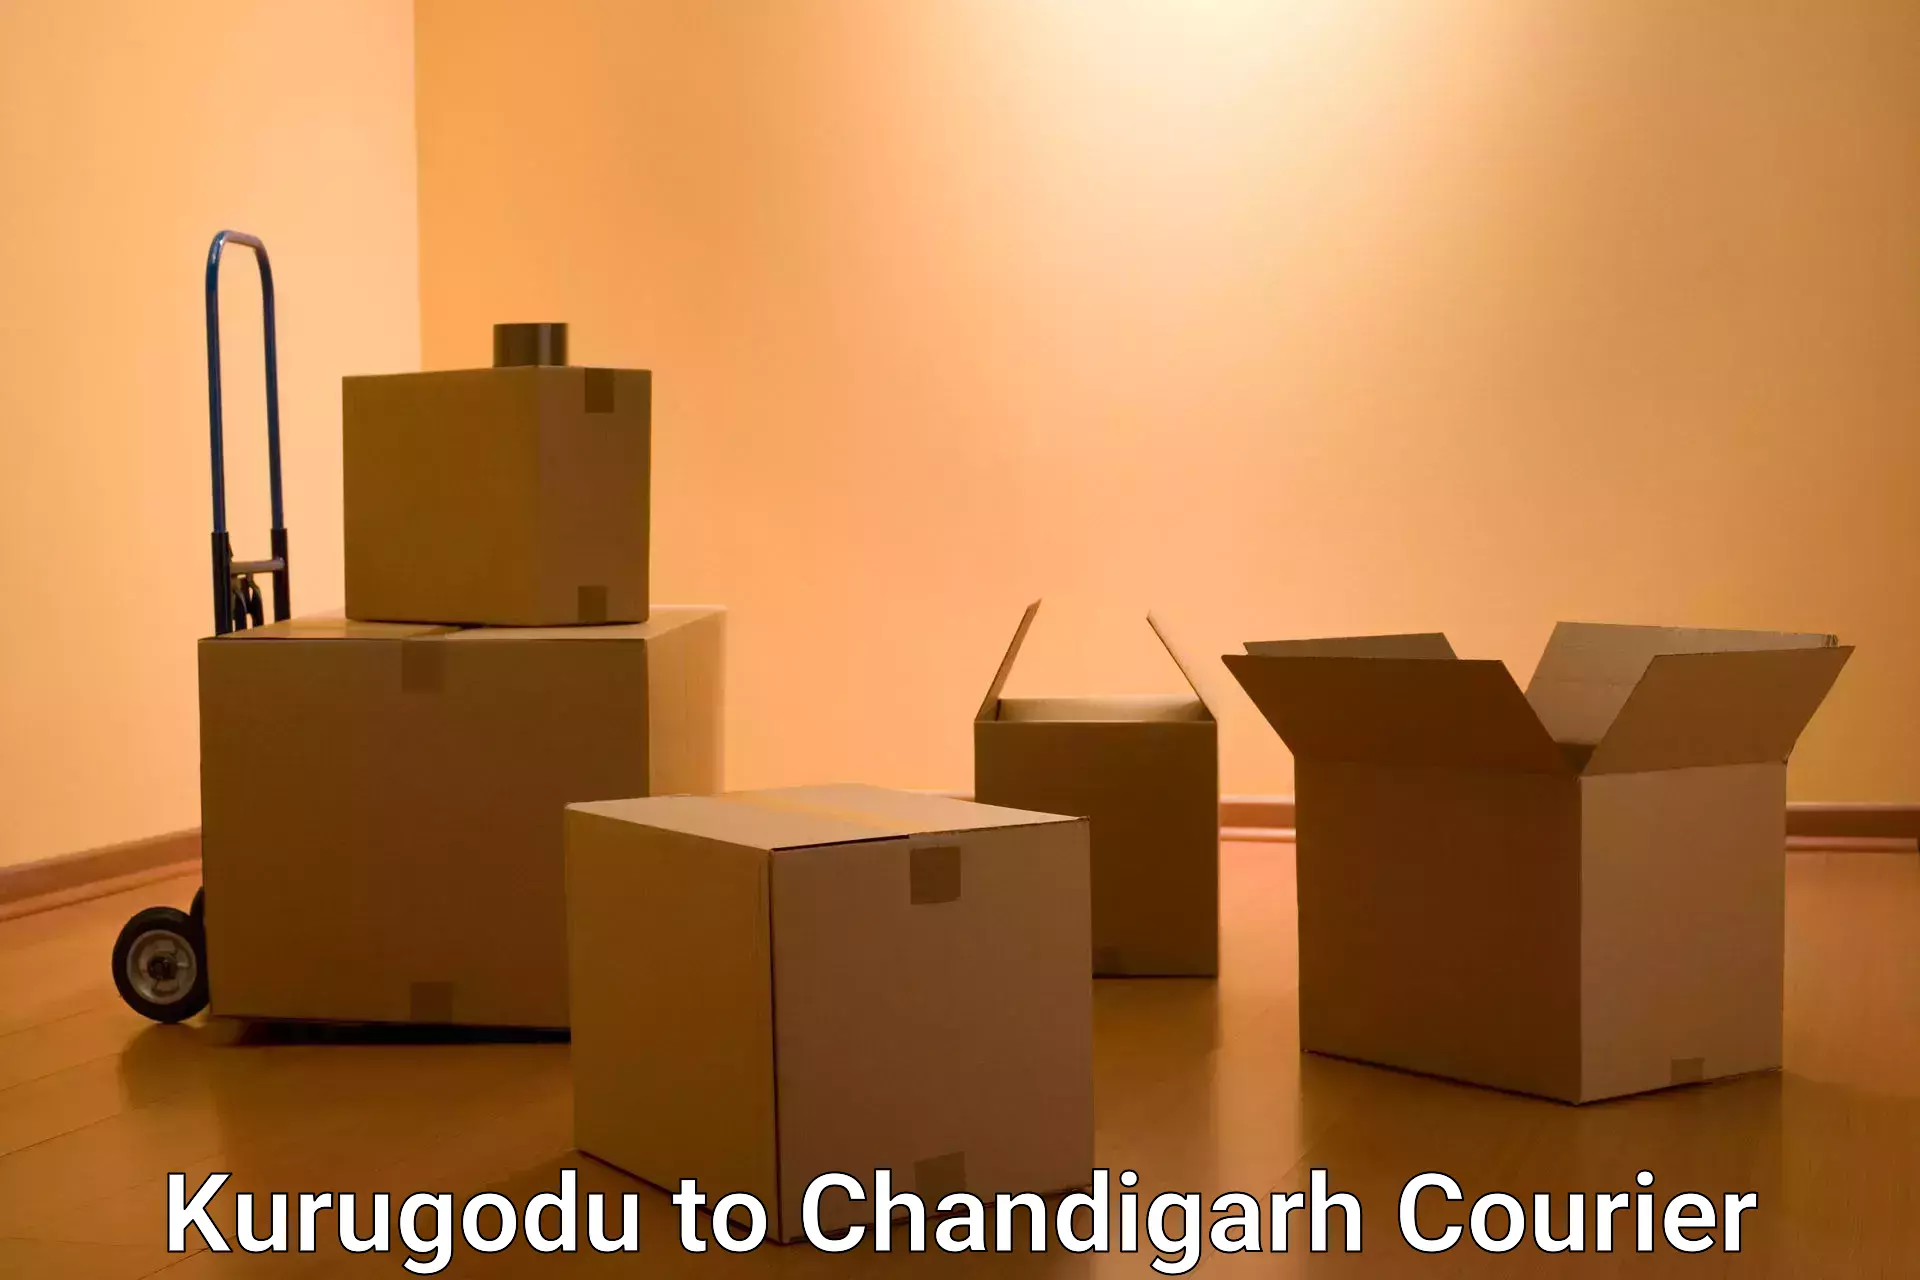 Fast delivery service Kurugodu to Chandigarh